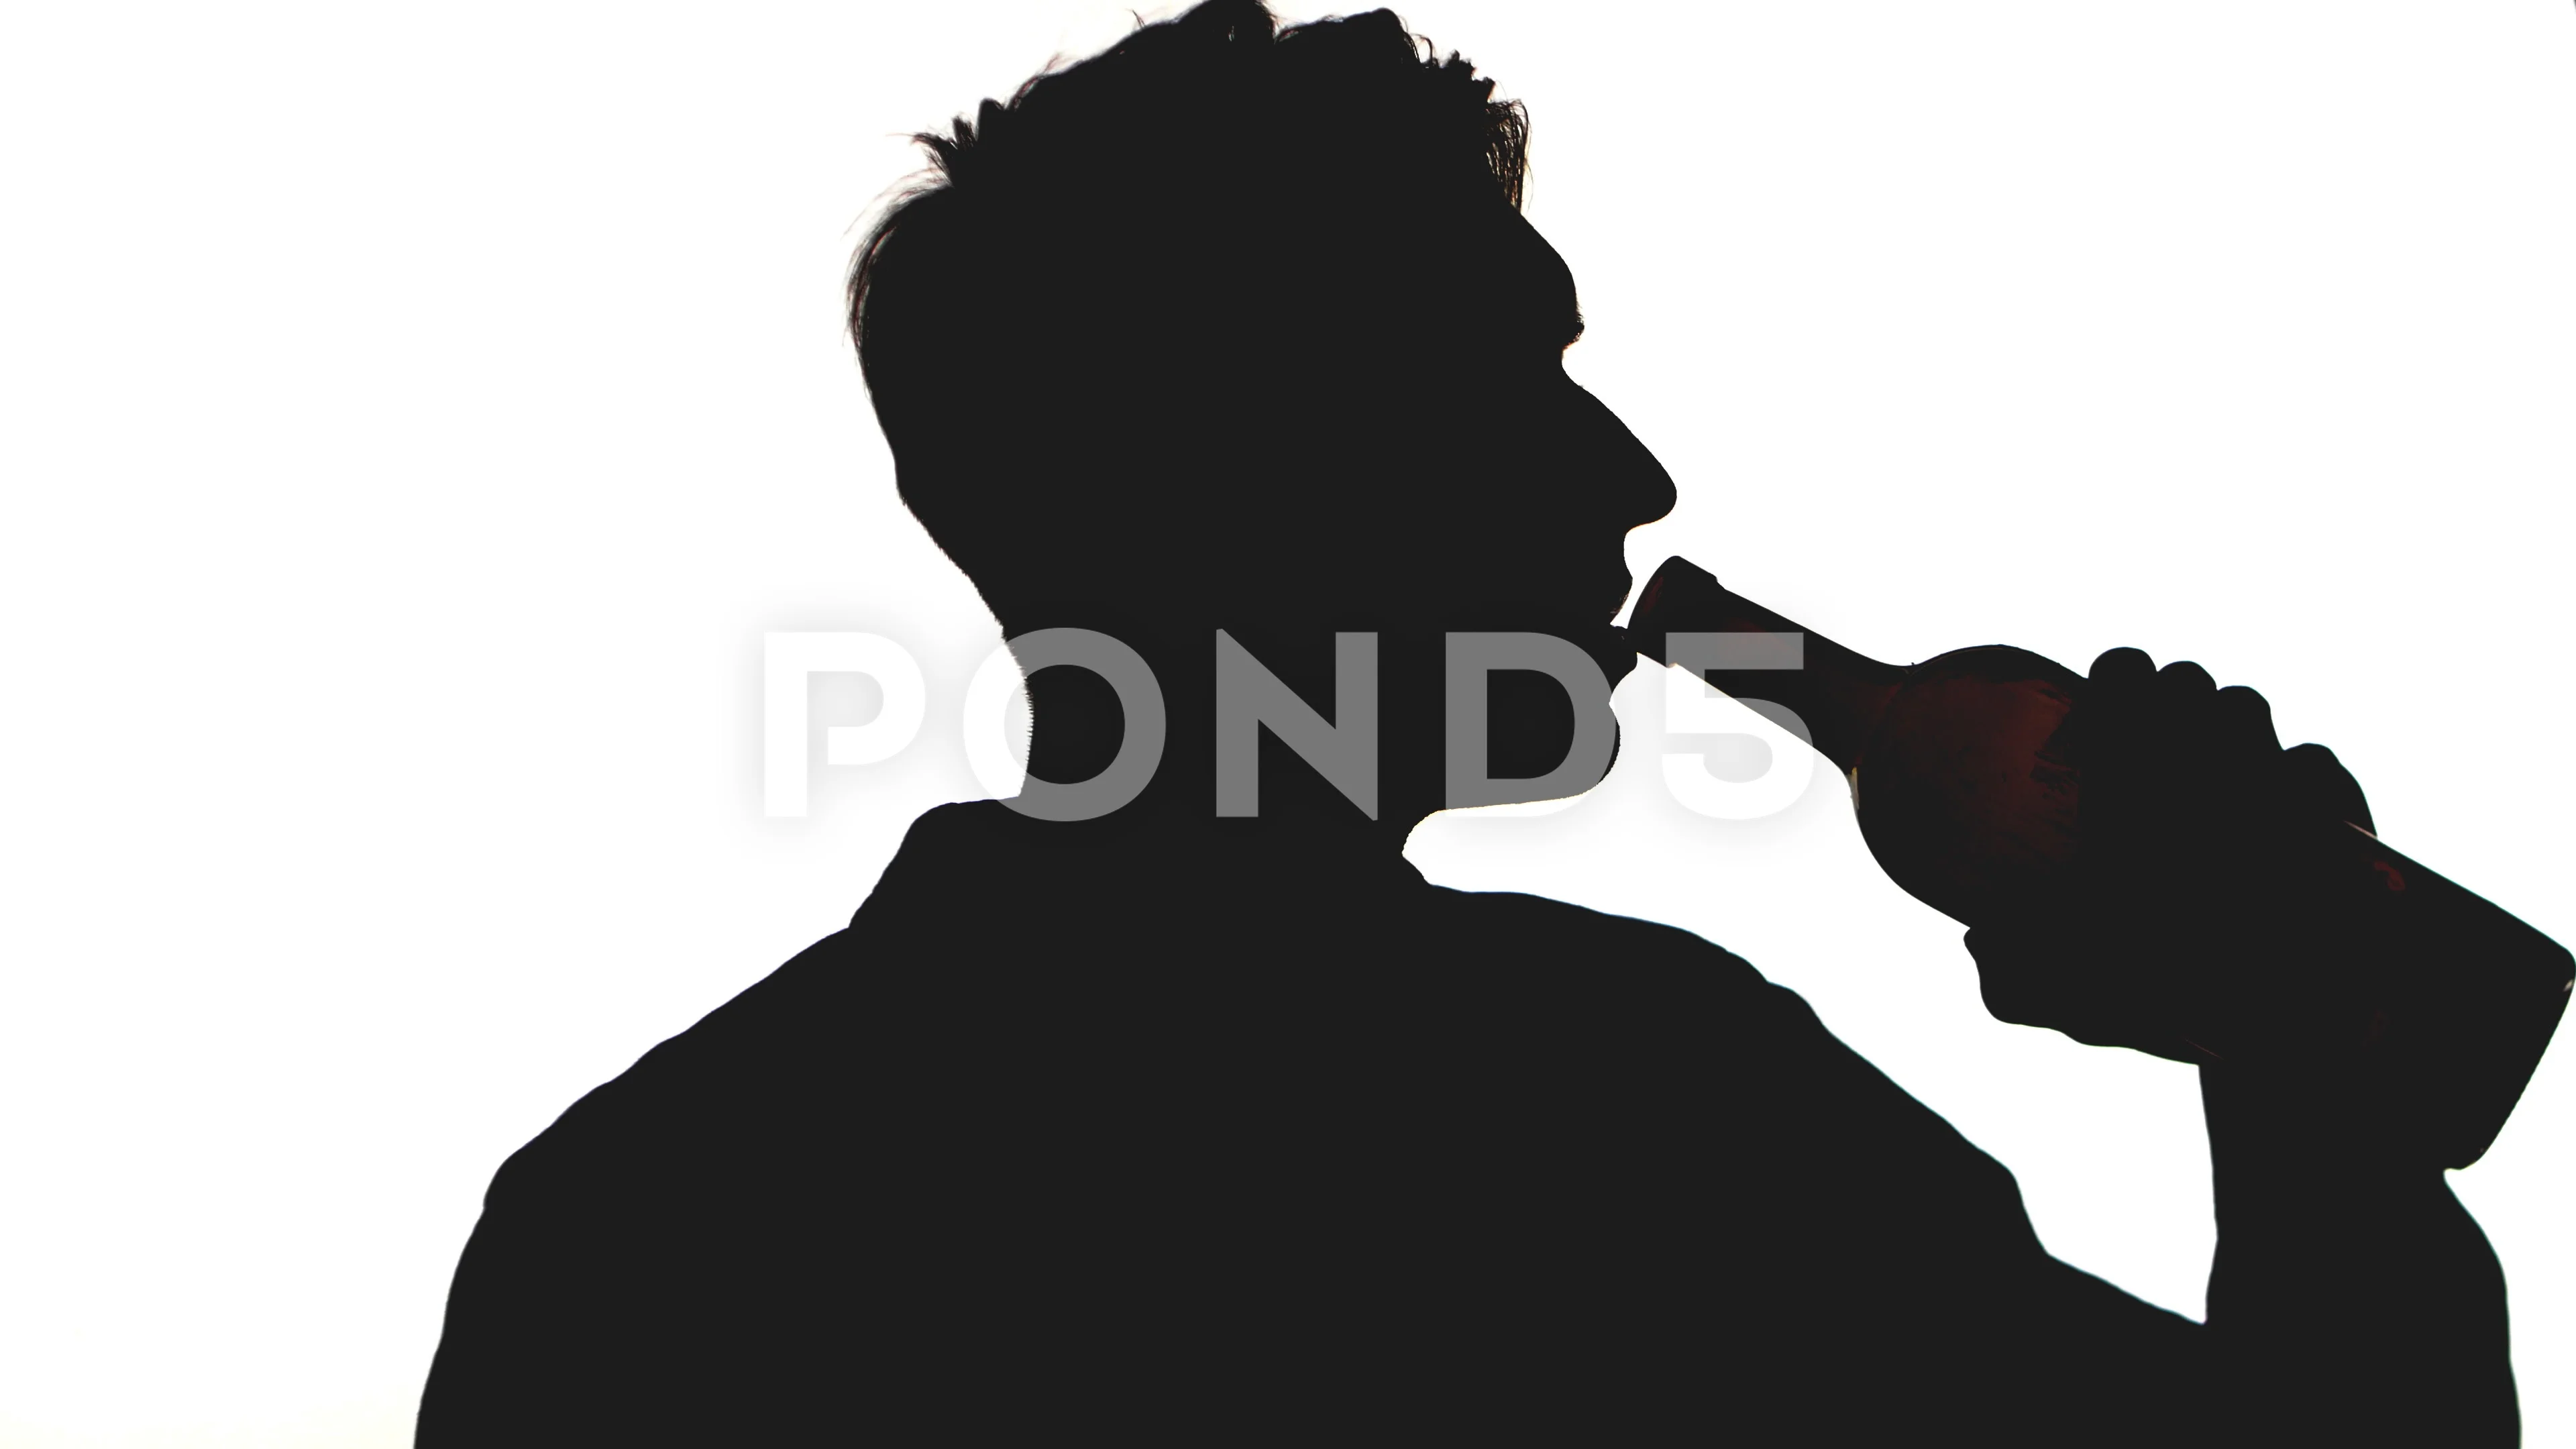 man drinking beer silhouette